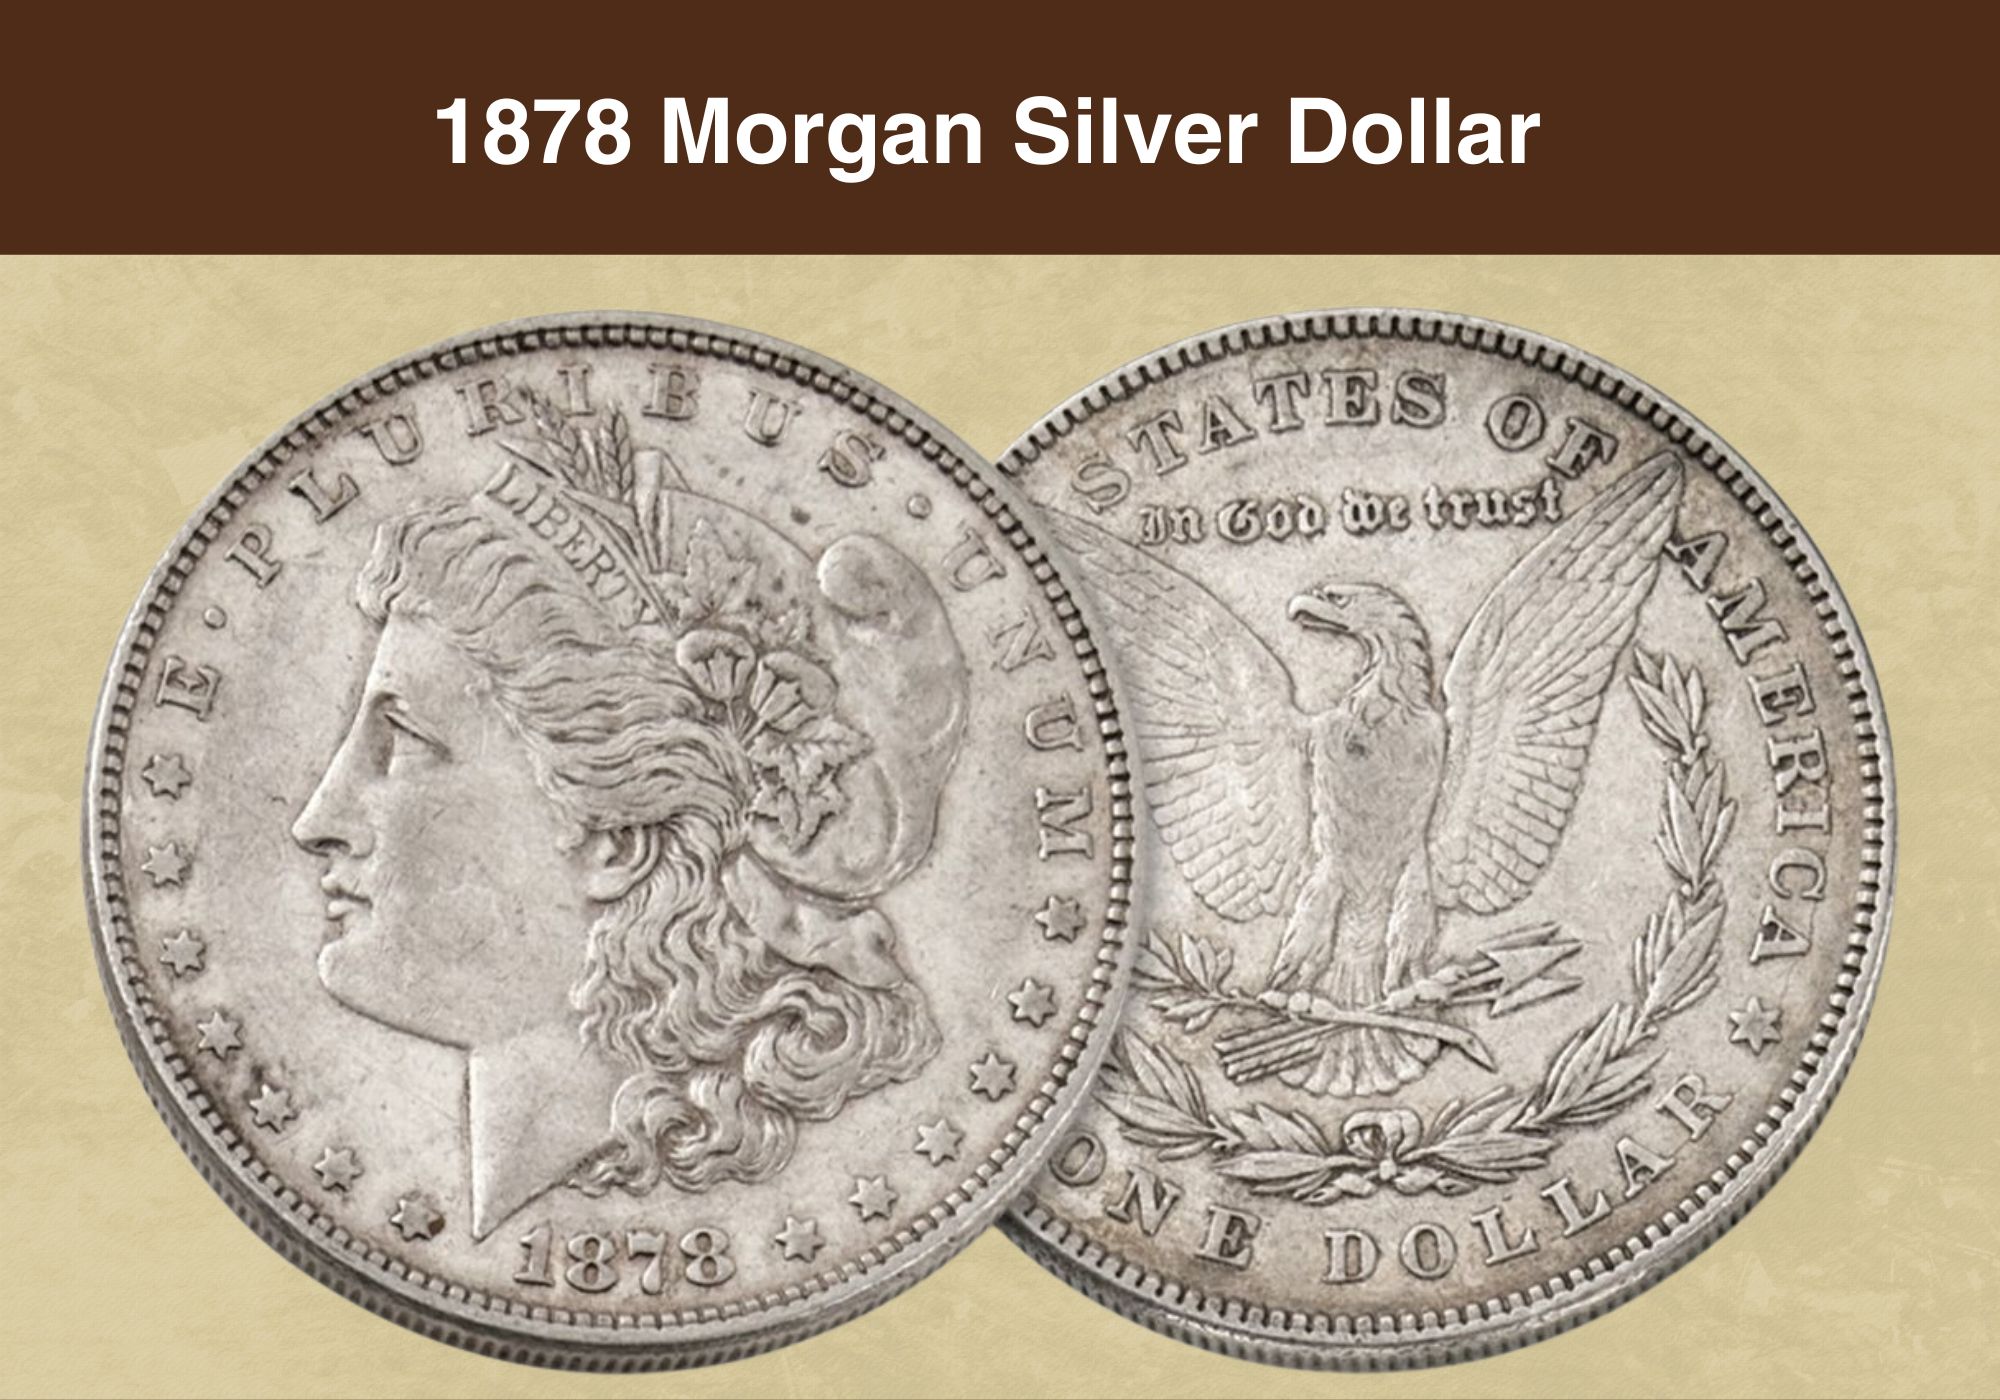 Morgan Silver Dollar Uncirculated 1878 7 over 8